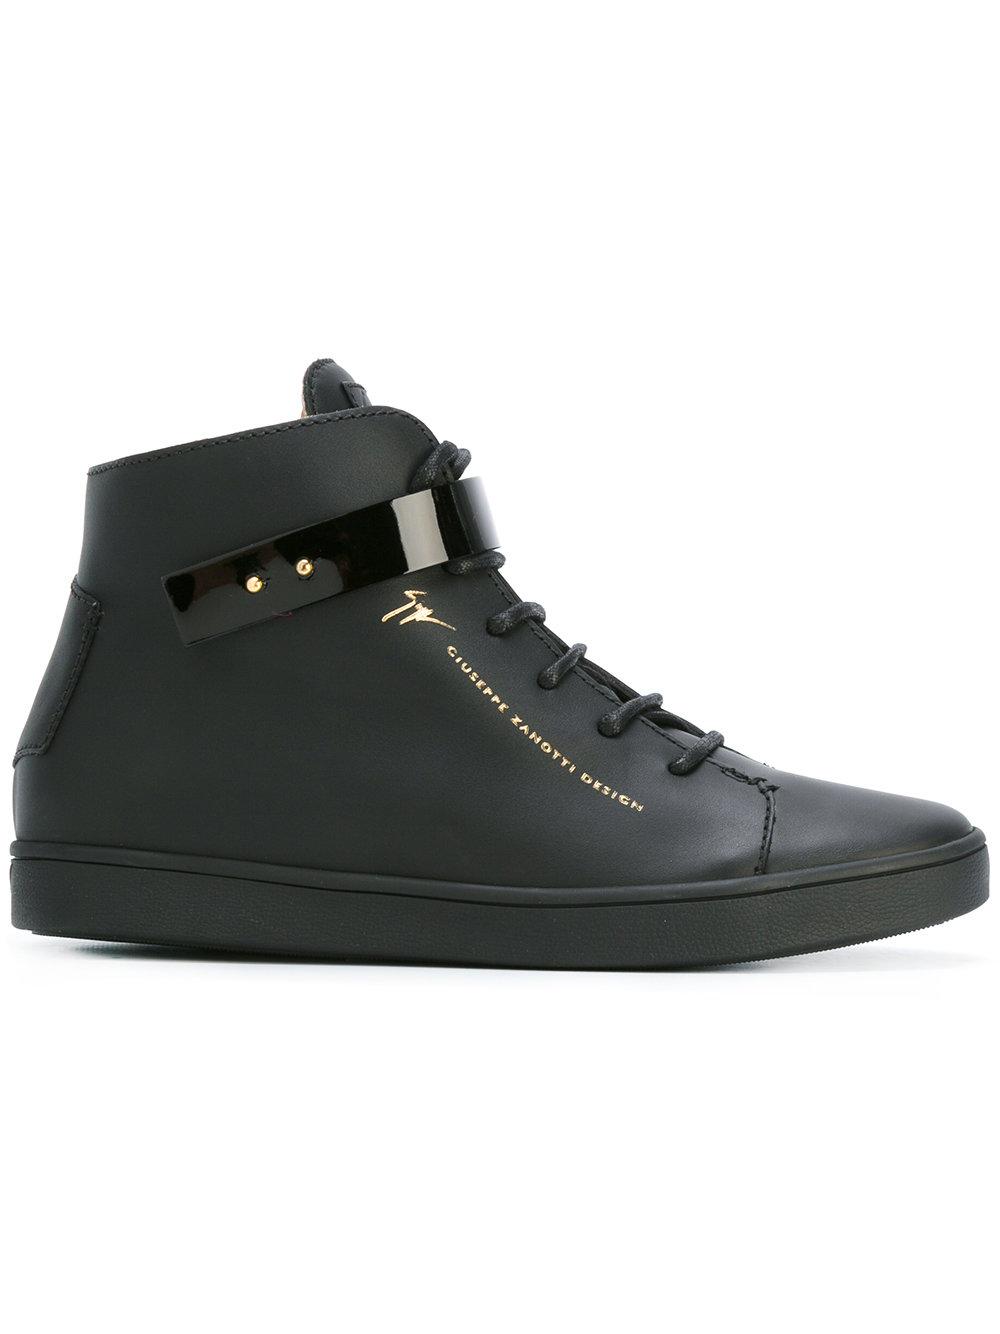 Lyst - Giuseppe Zanotti Signature Hi-top Sneakers in Black